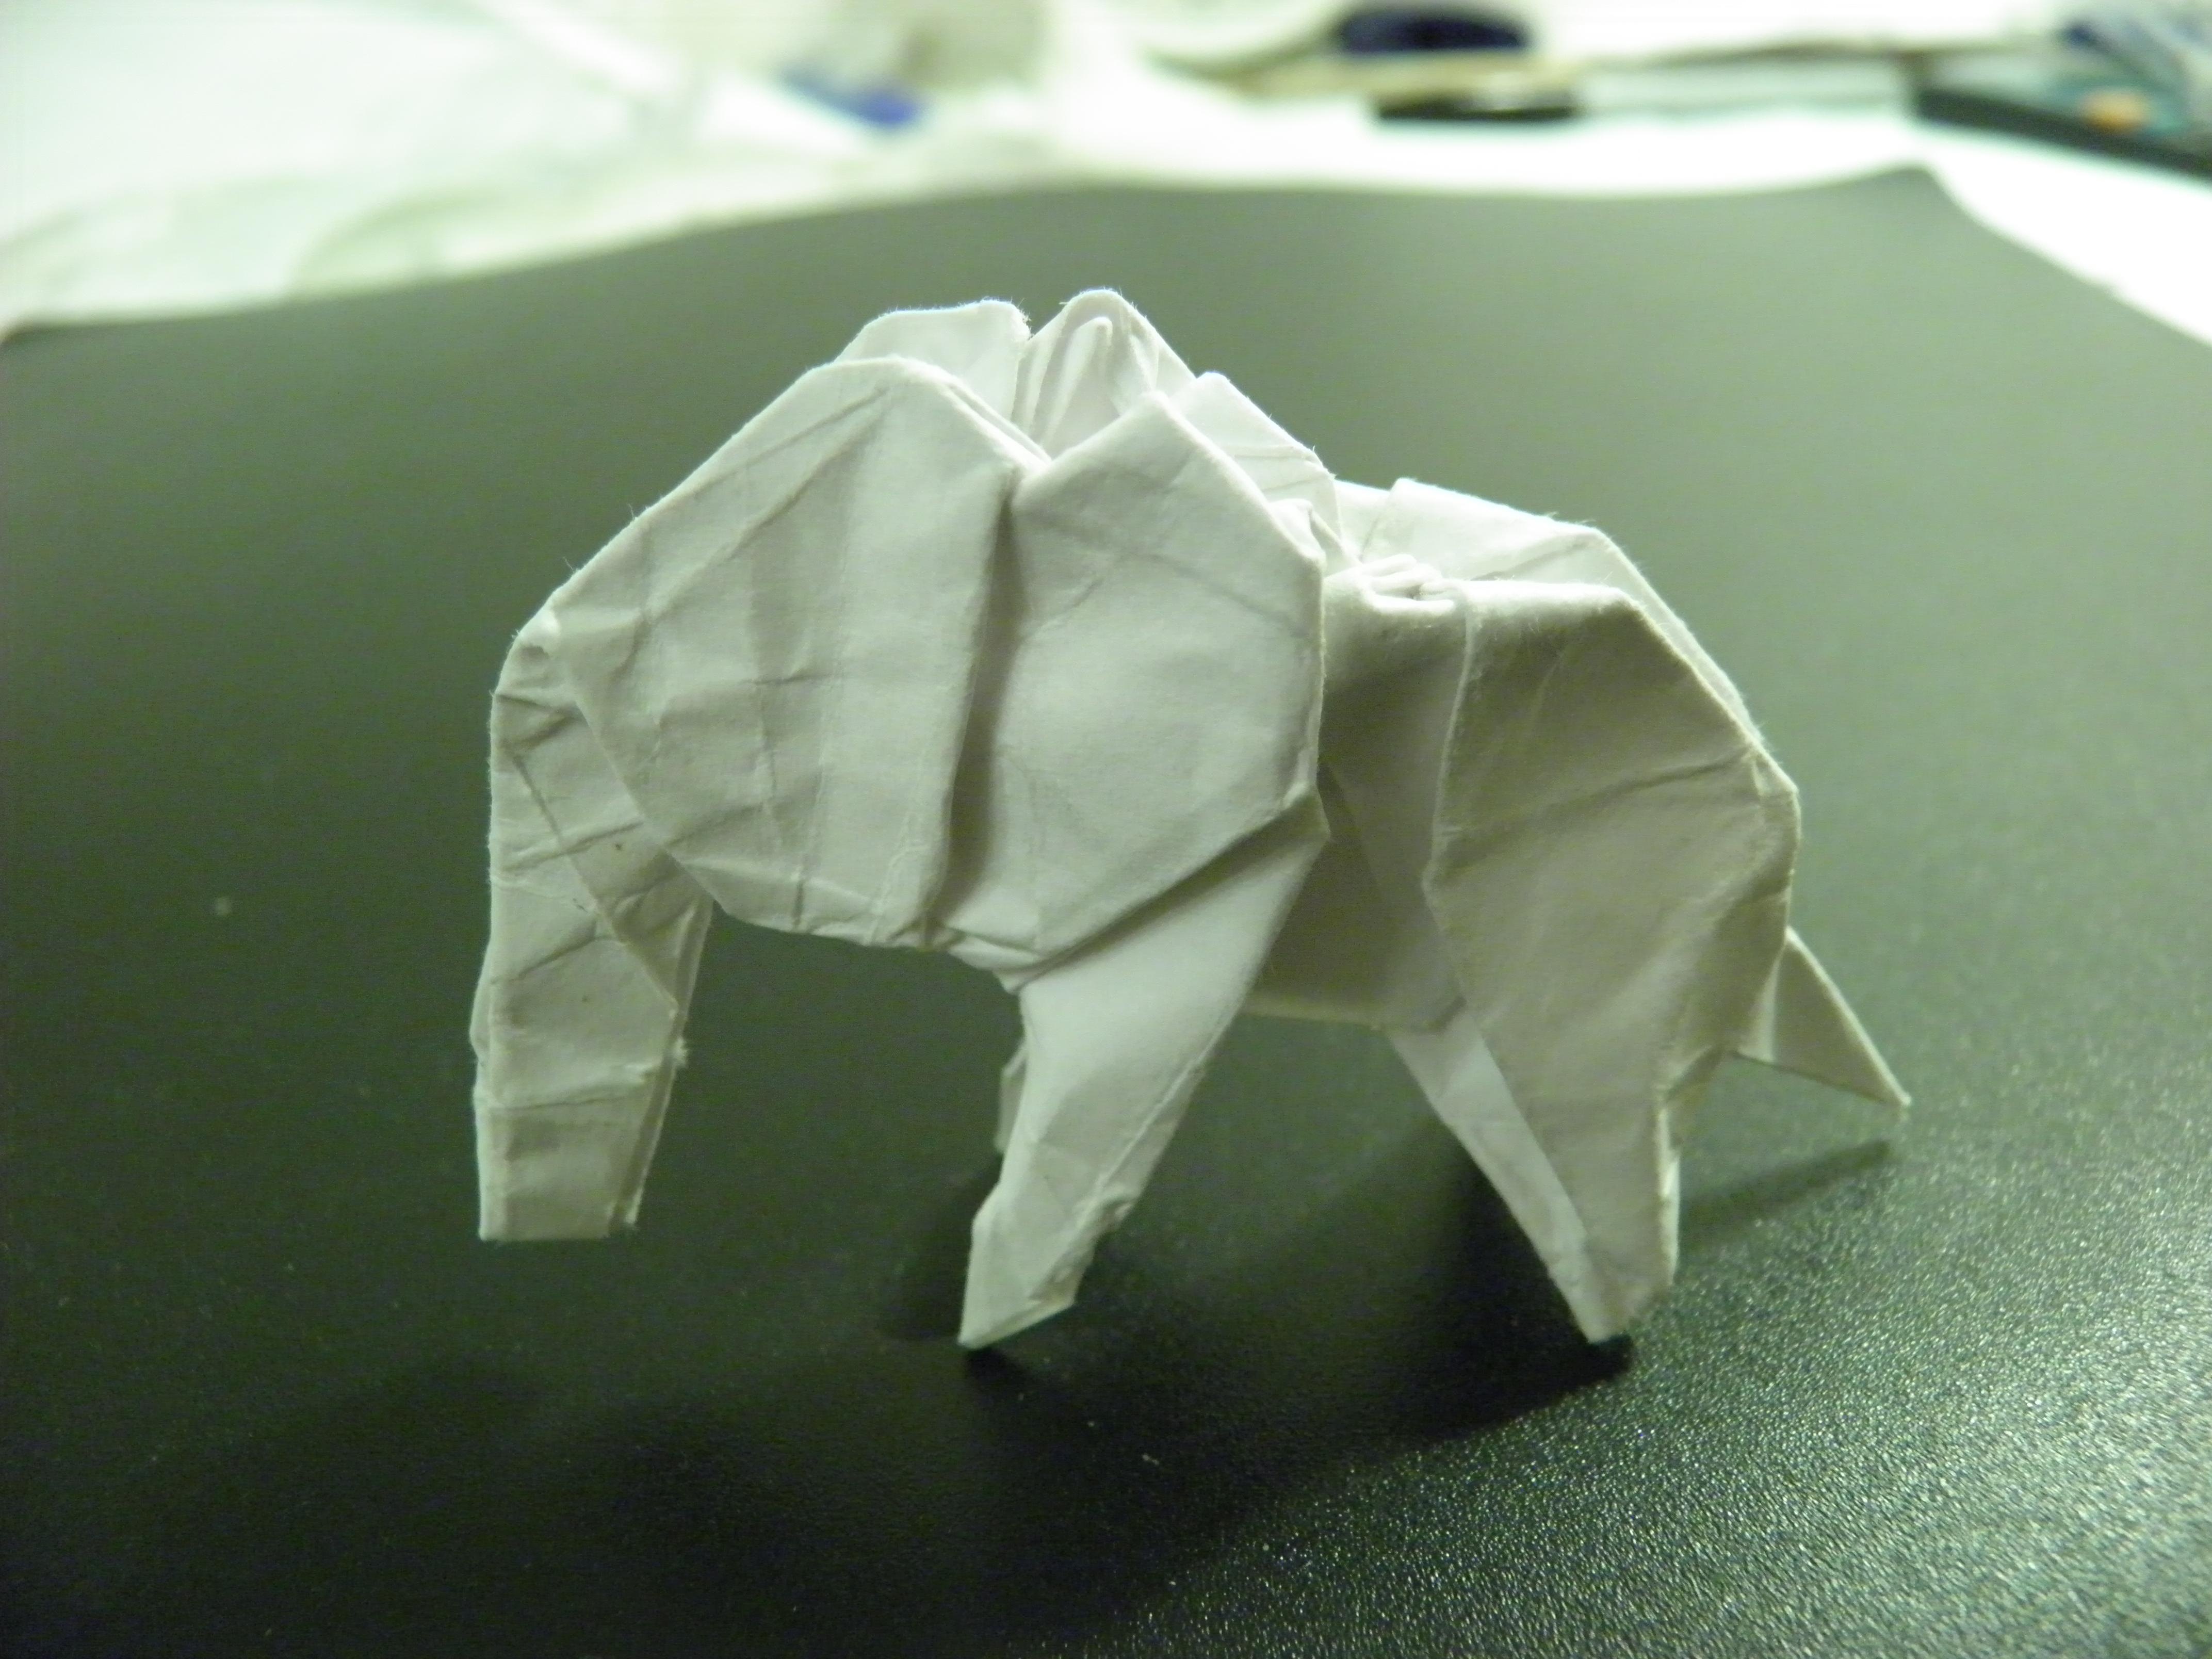 Fish Base Origami Origami Elephant I Designed And Folded Out Of A Fish Base Origami